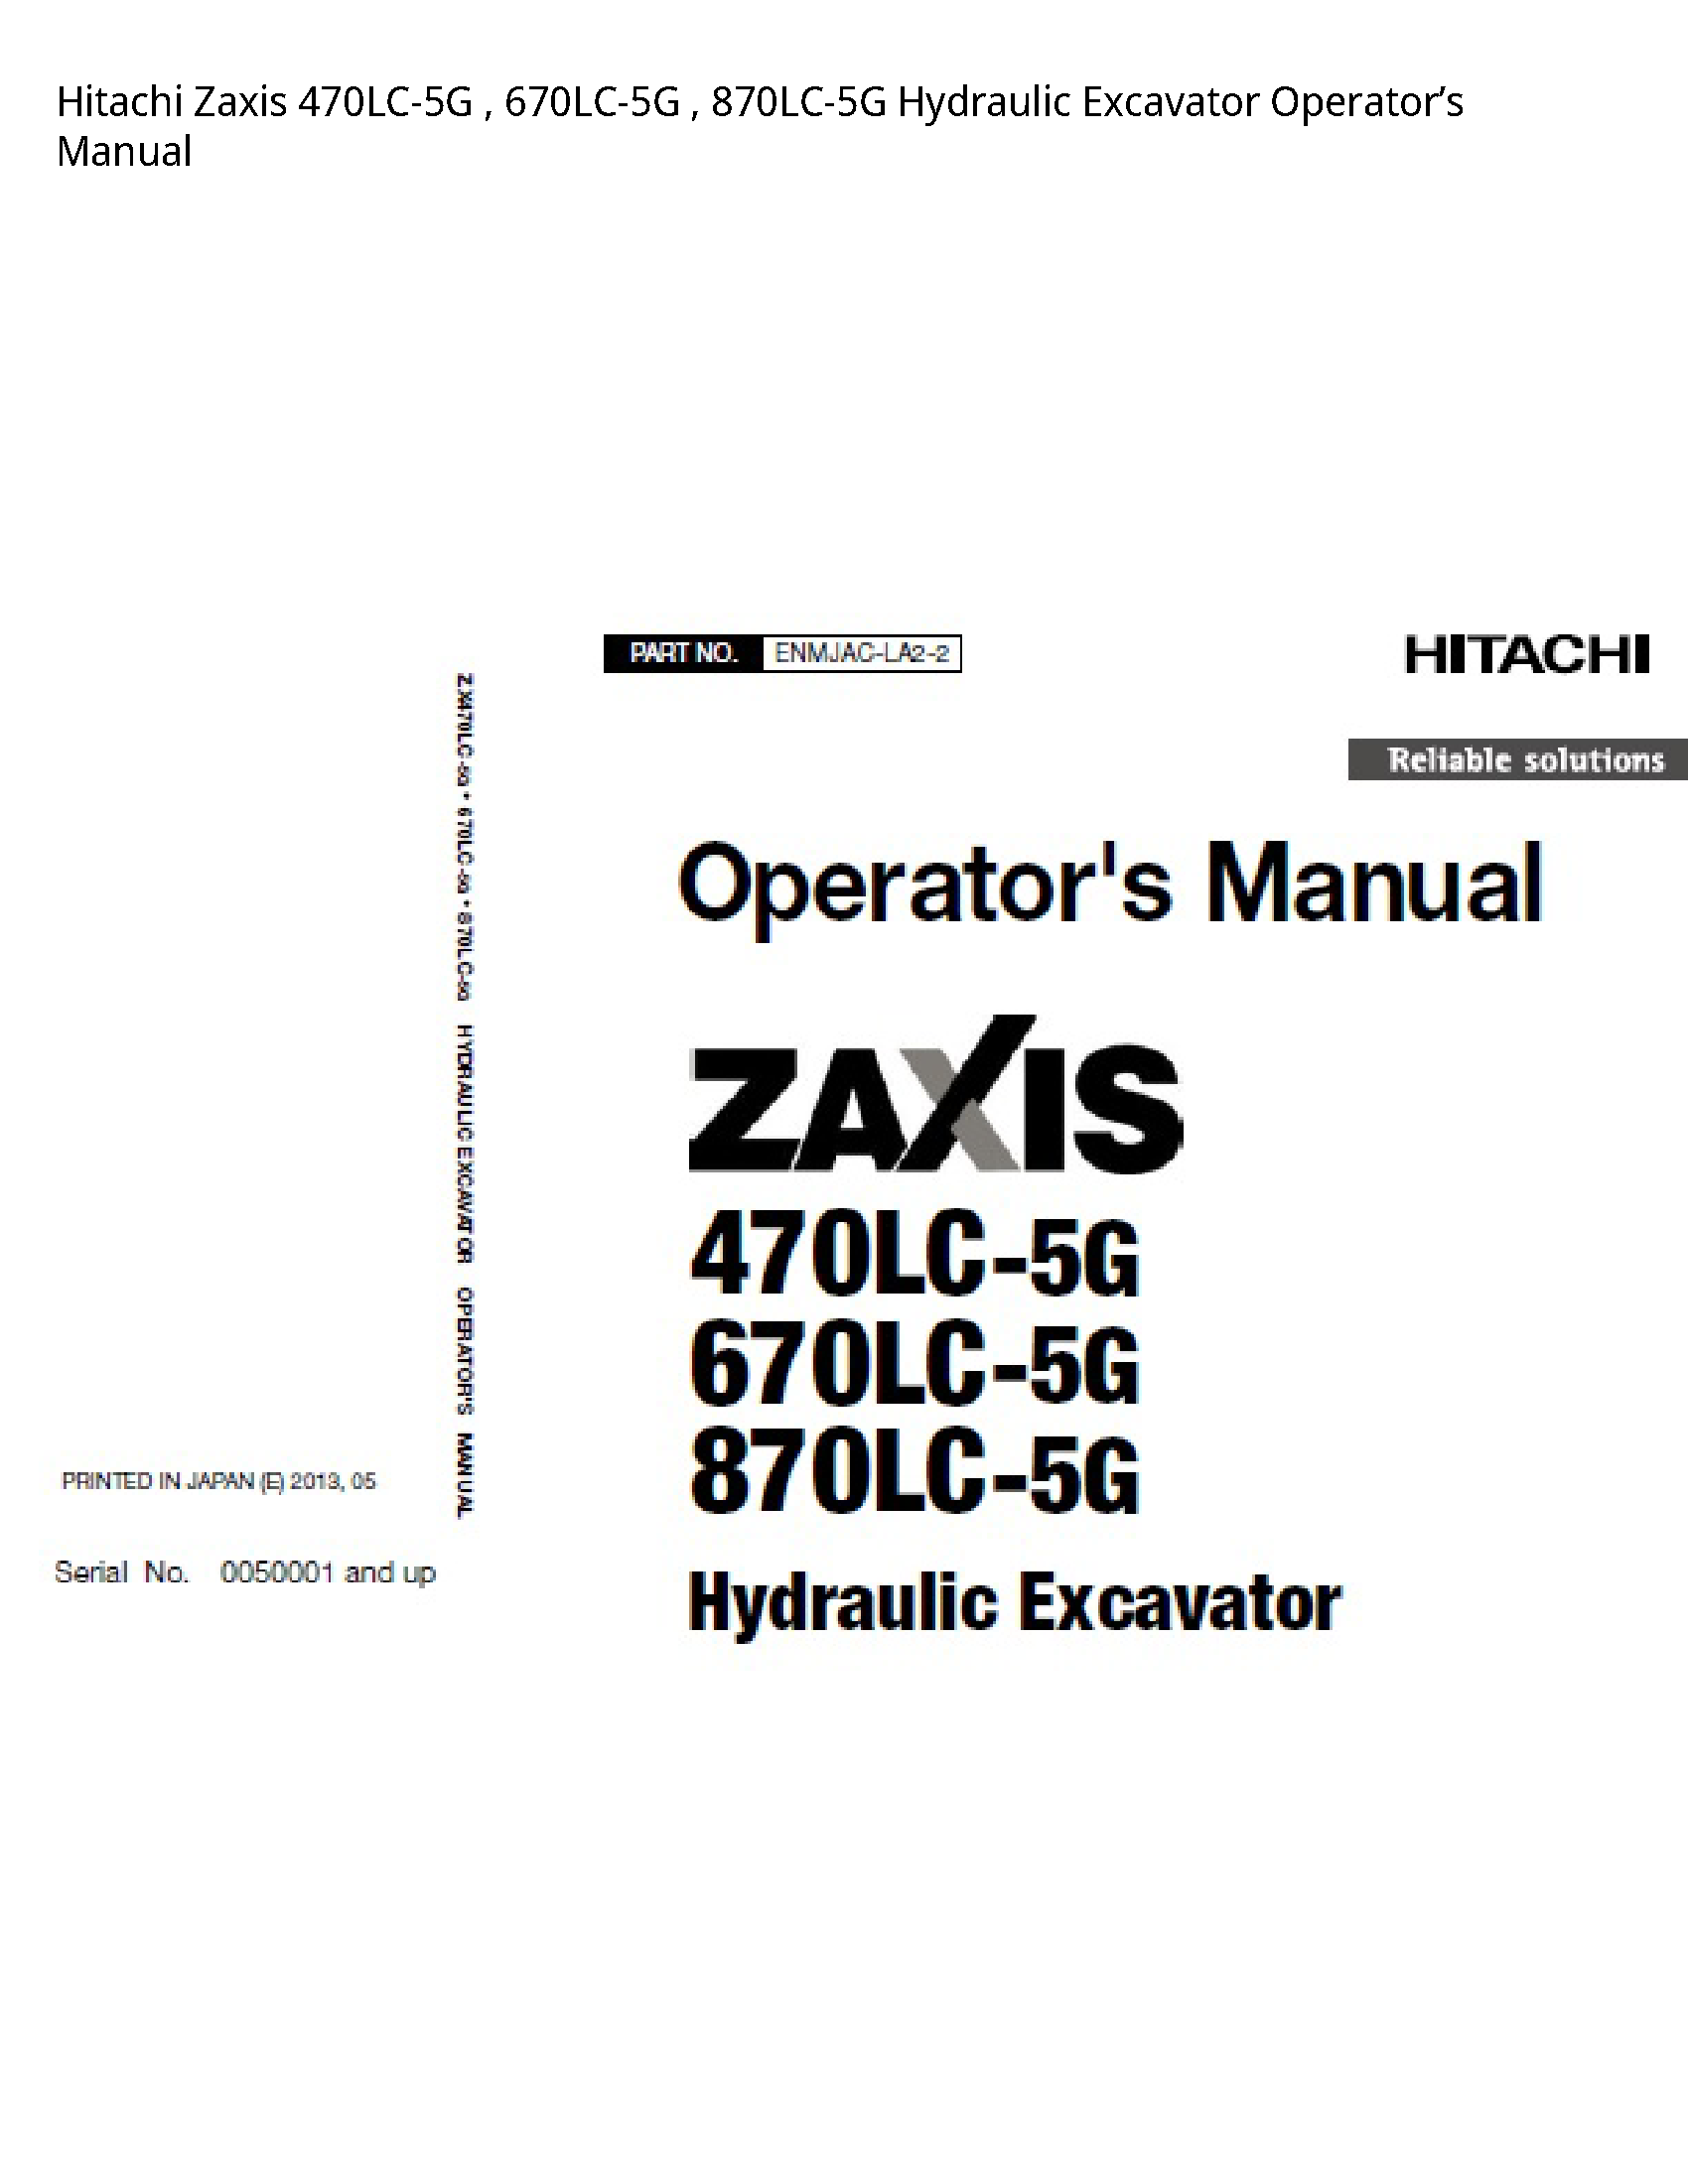 Hitachi 470LC-5G Zaxis Hydraulic Excavator Operator’s manual